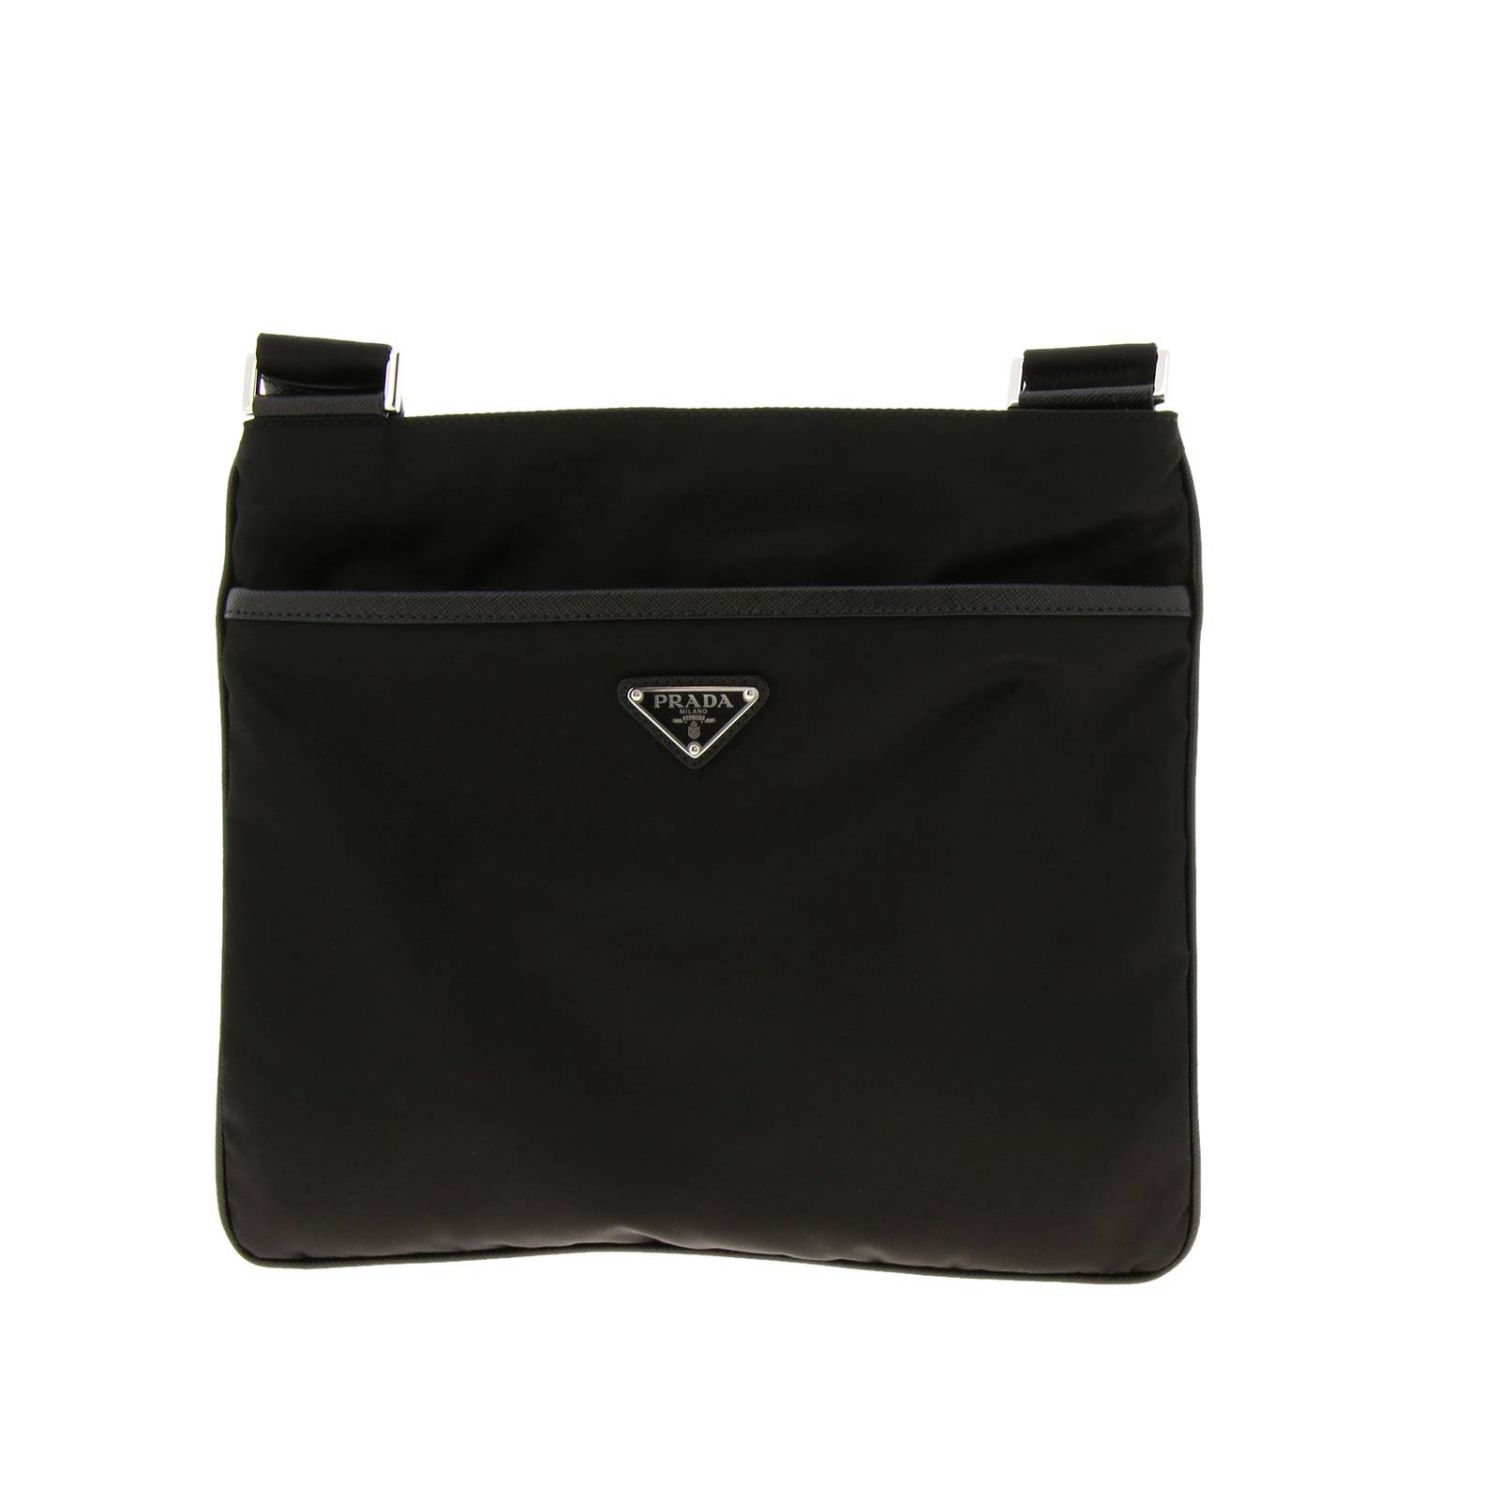 PRADA: Flat nylon shoulder bag with triangular logo - Black | Prada  shoulder bag 2VH053 064 online on 